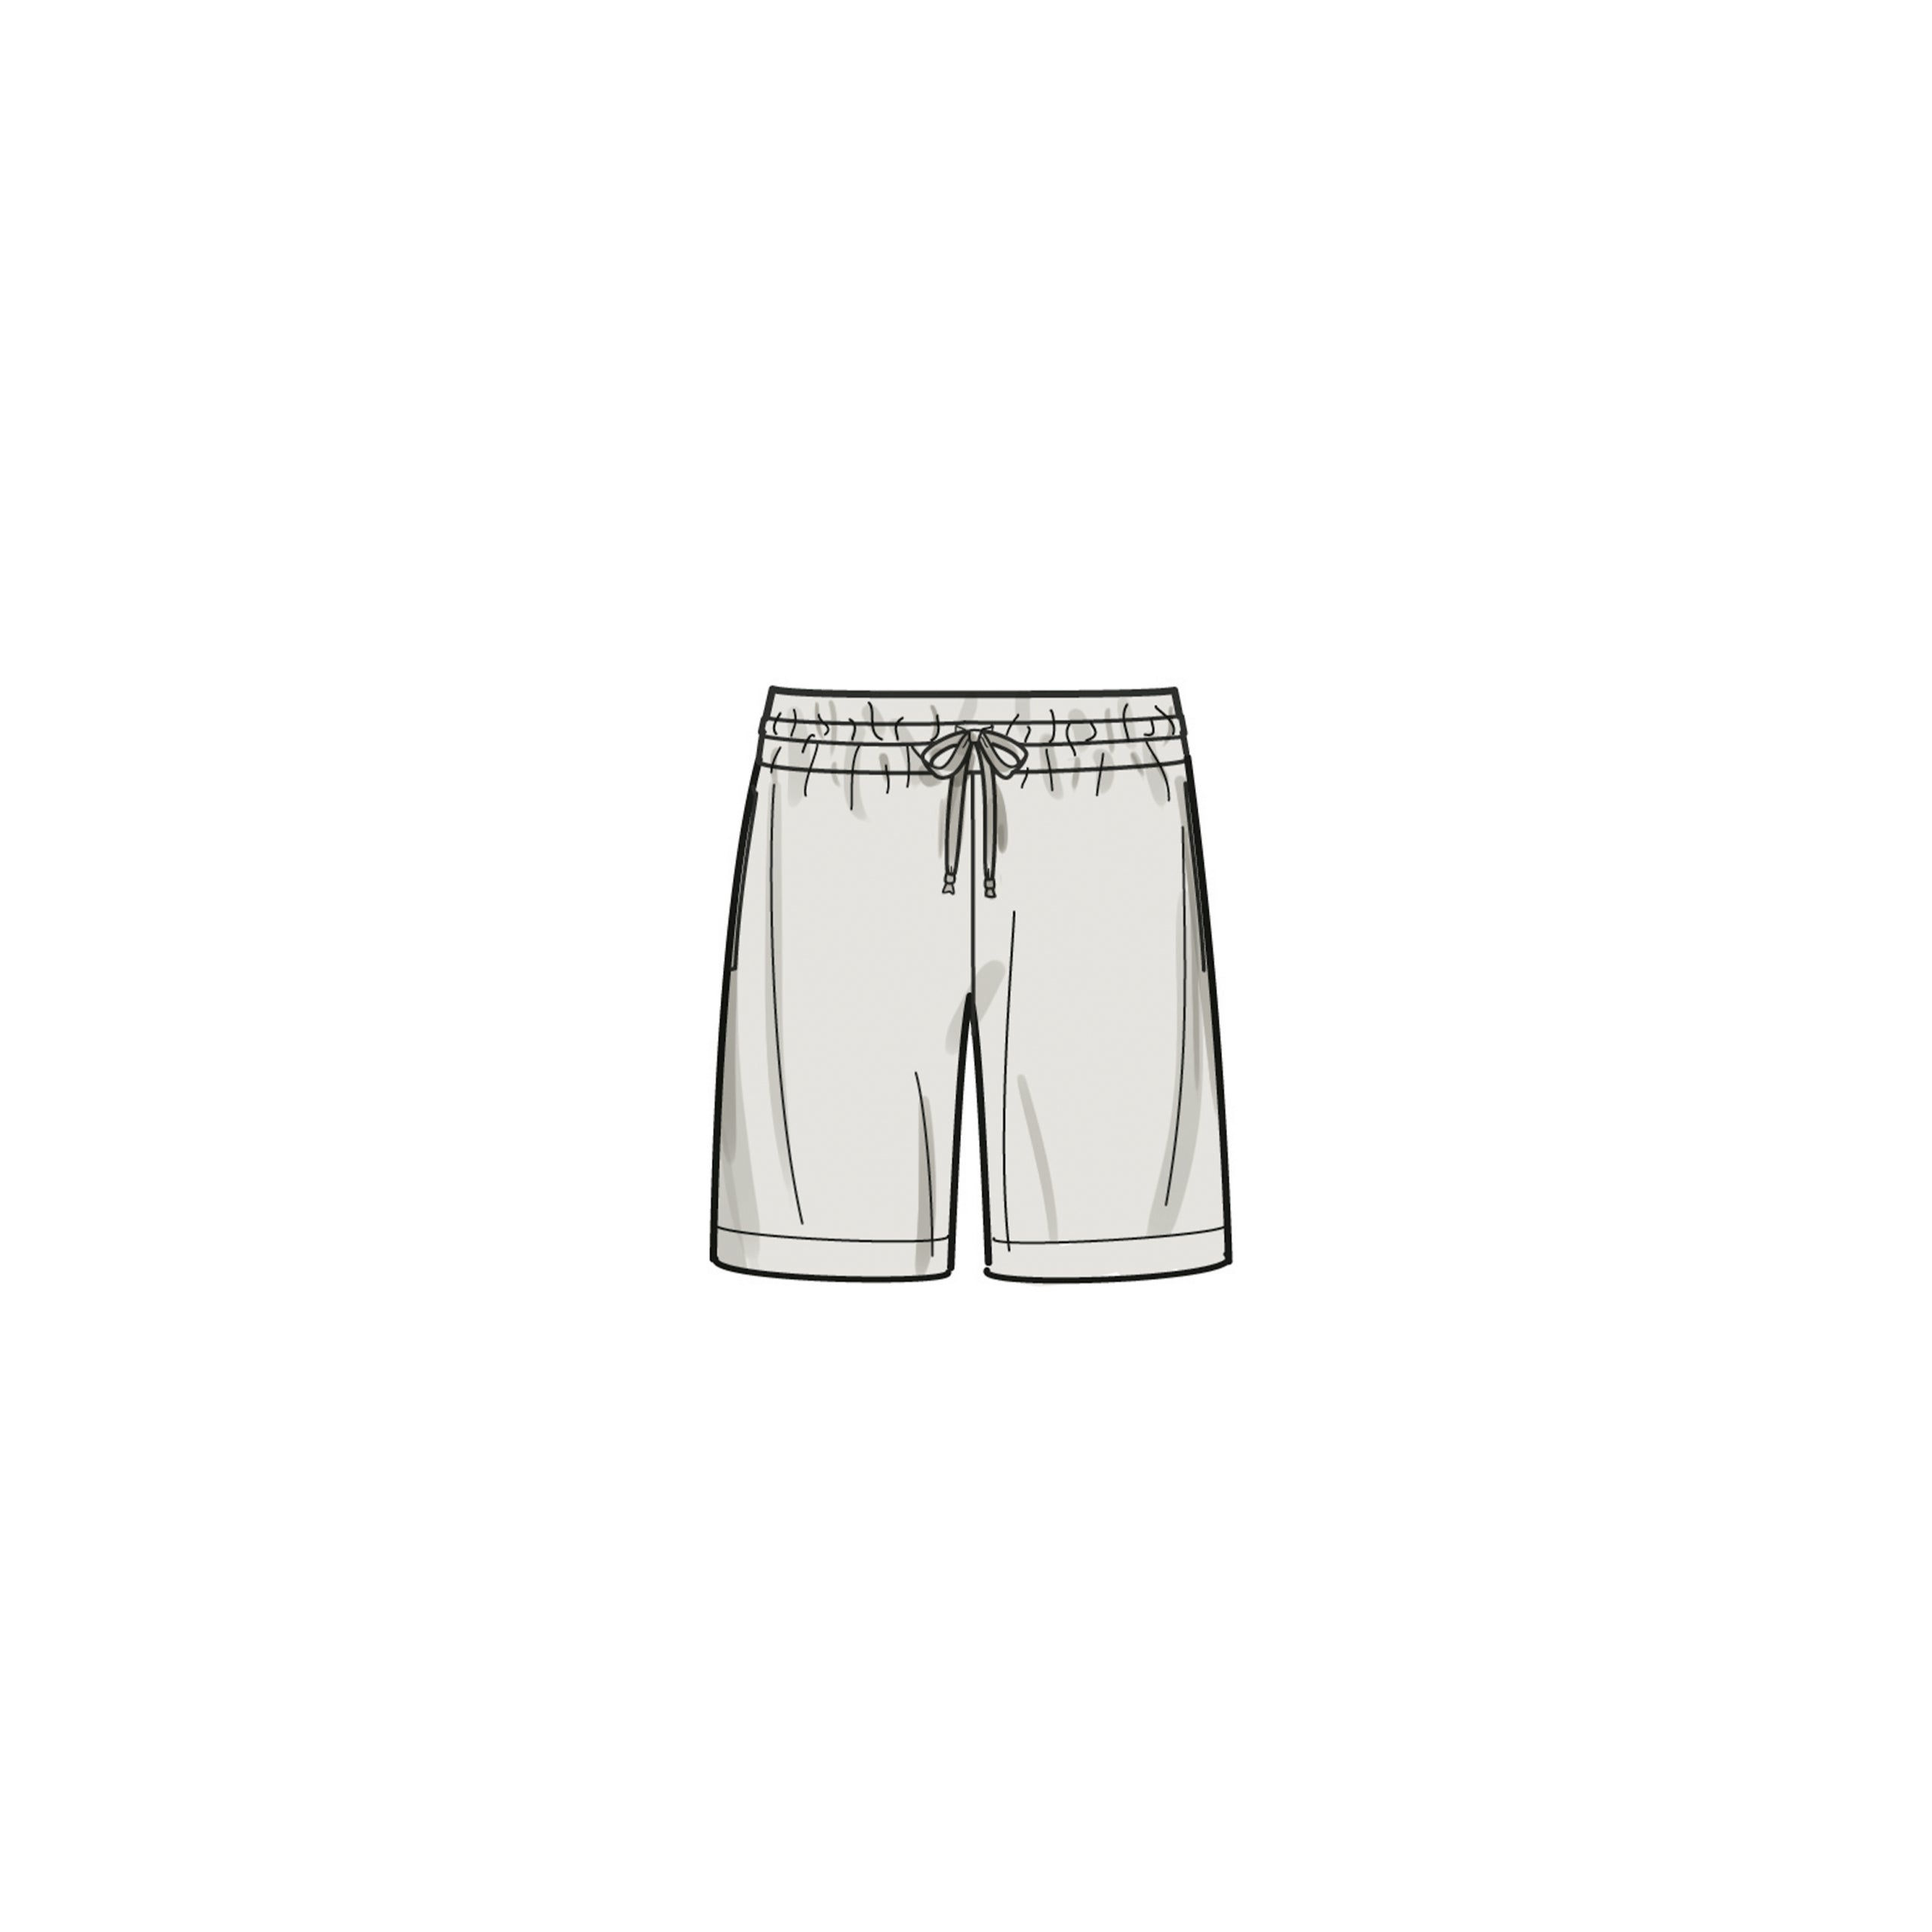 Simplicity Unisex/Child Lounge Shirt, Cardigan, Shorts and Joggers S9691